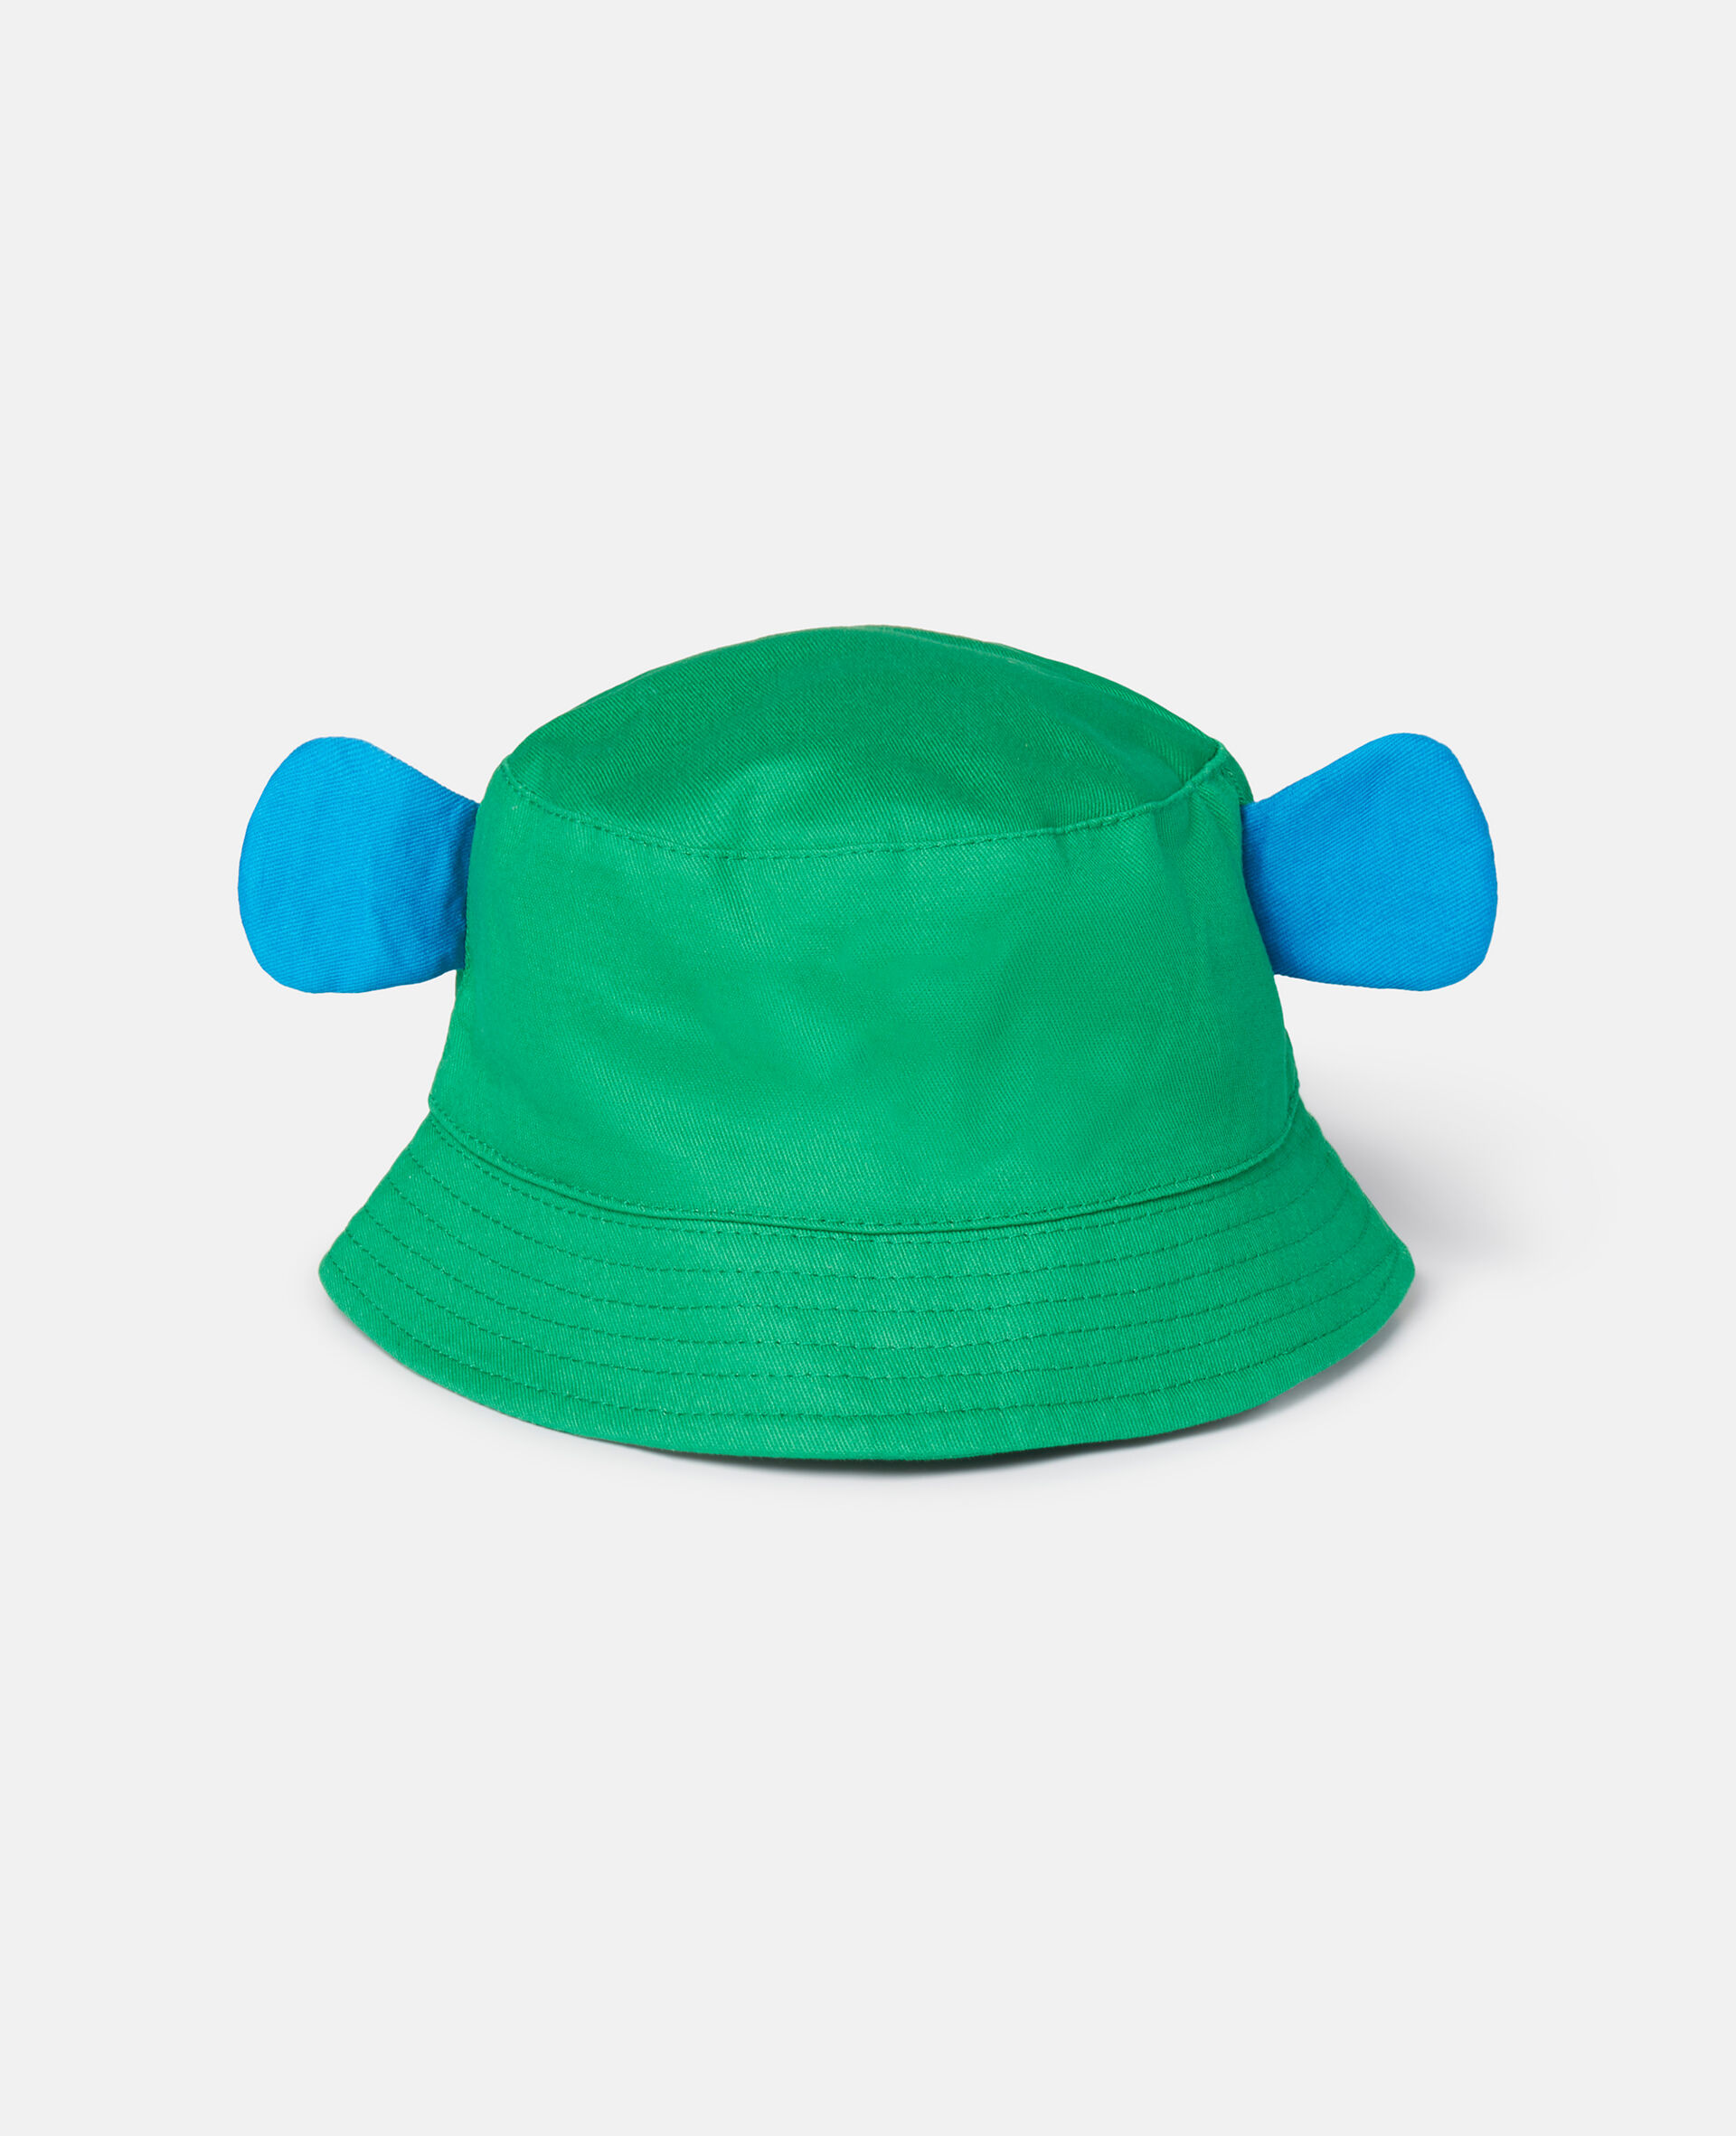 Monkey Face Bucket Hat-Green-large image number 2